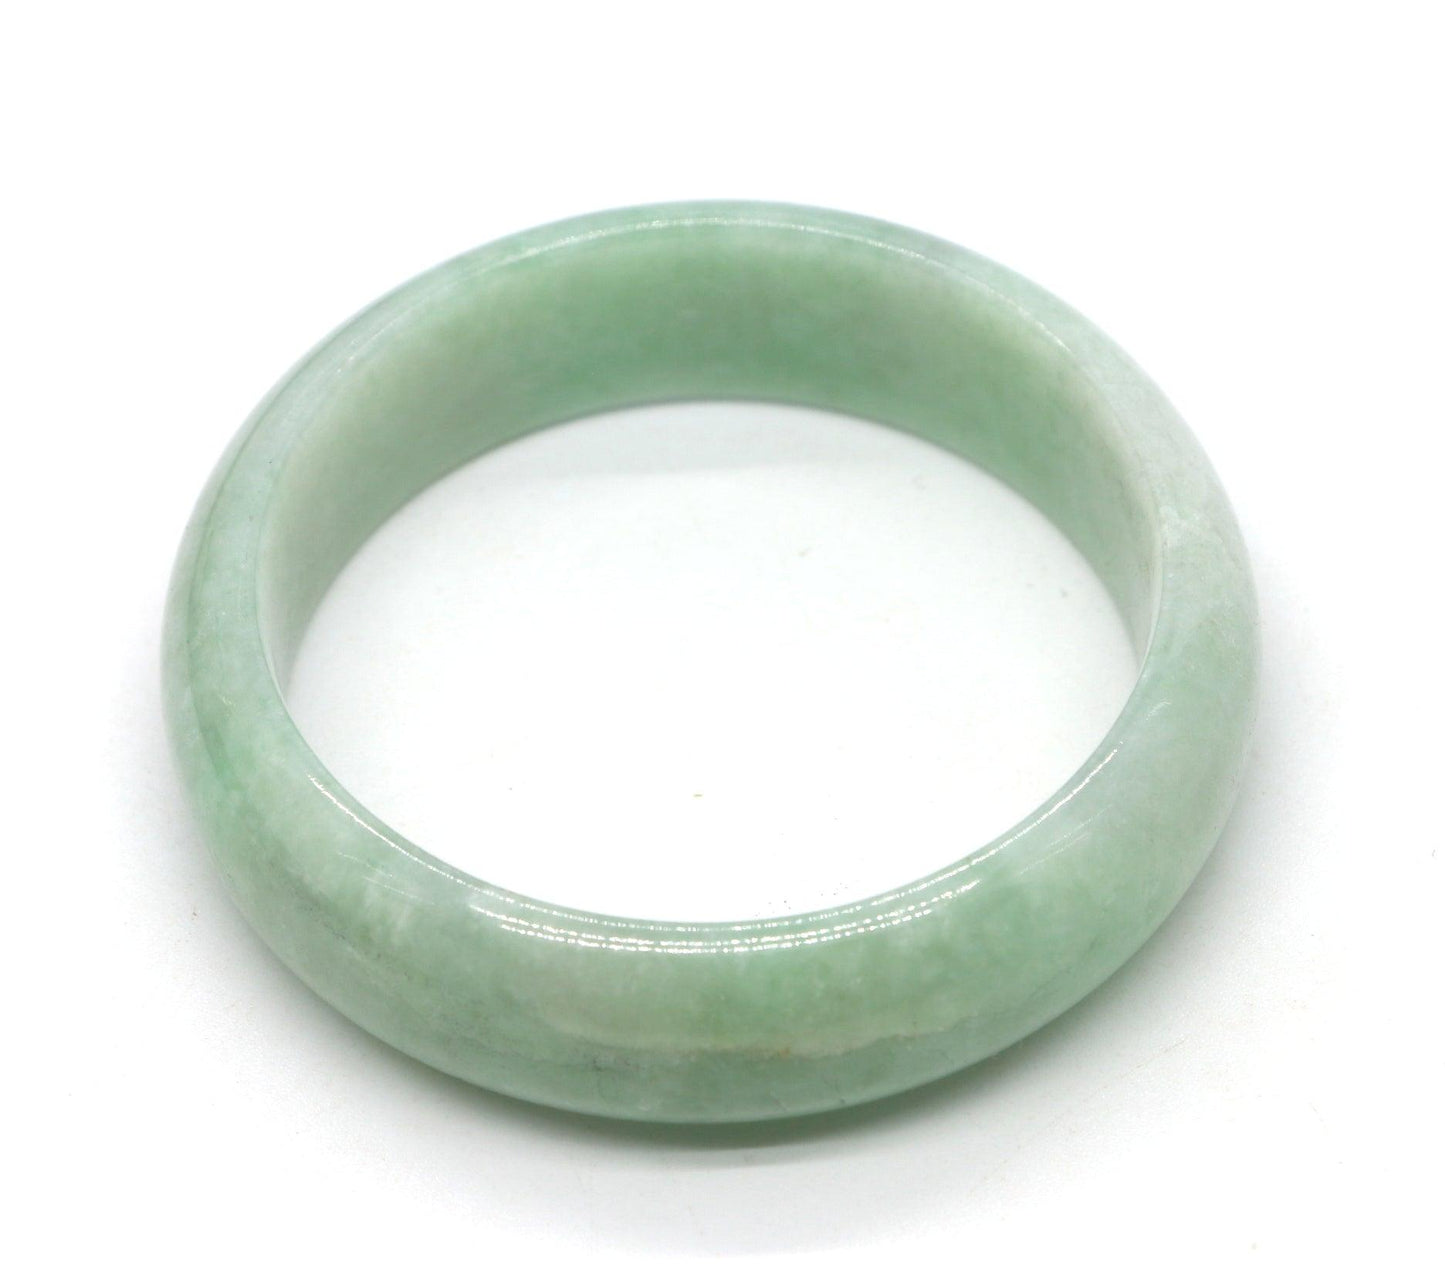 Type A Certified Jadeite Jade Bangle Size 54 -56mm B0BN7JBF56 - Jade-collector.com